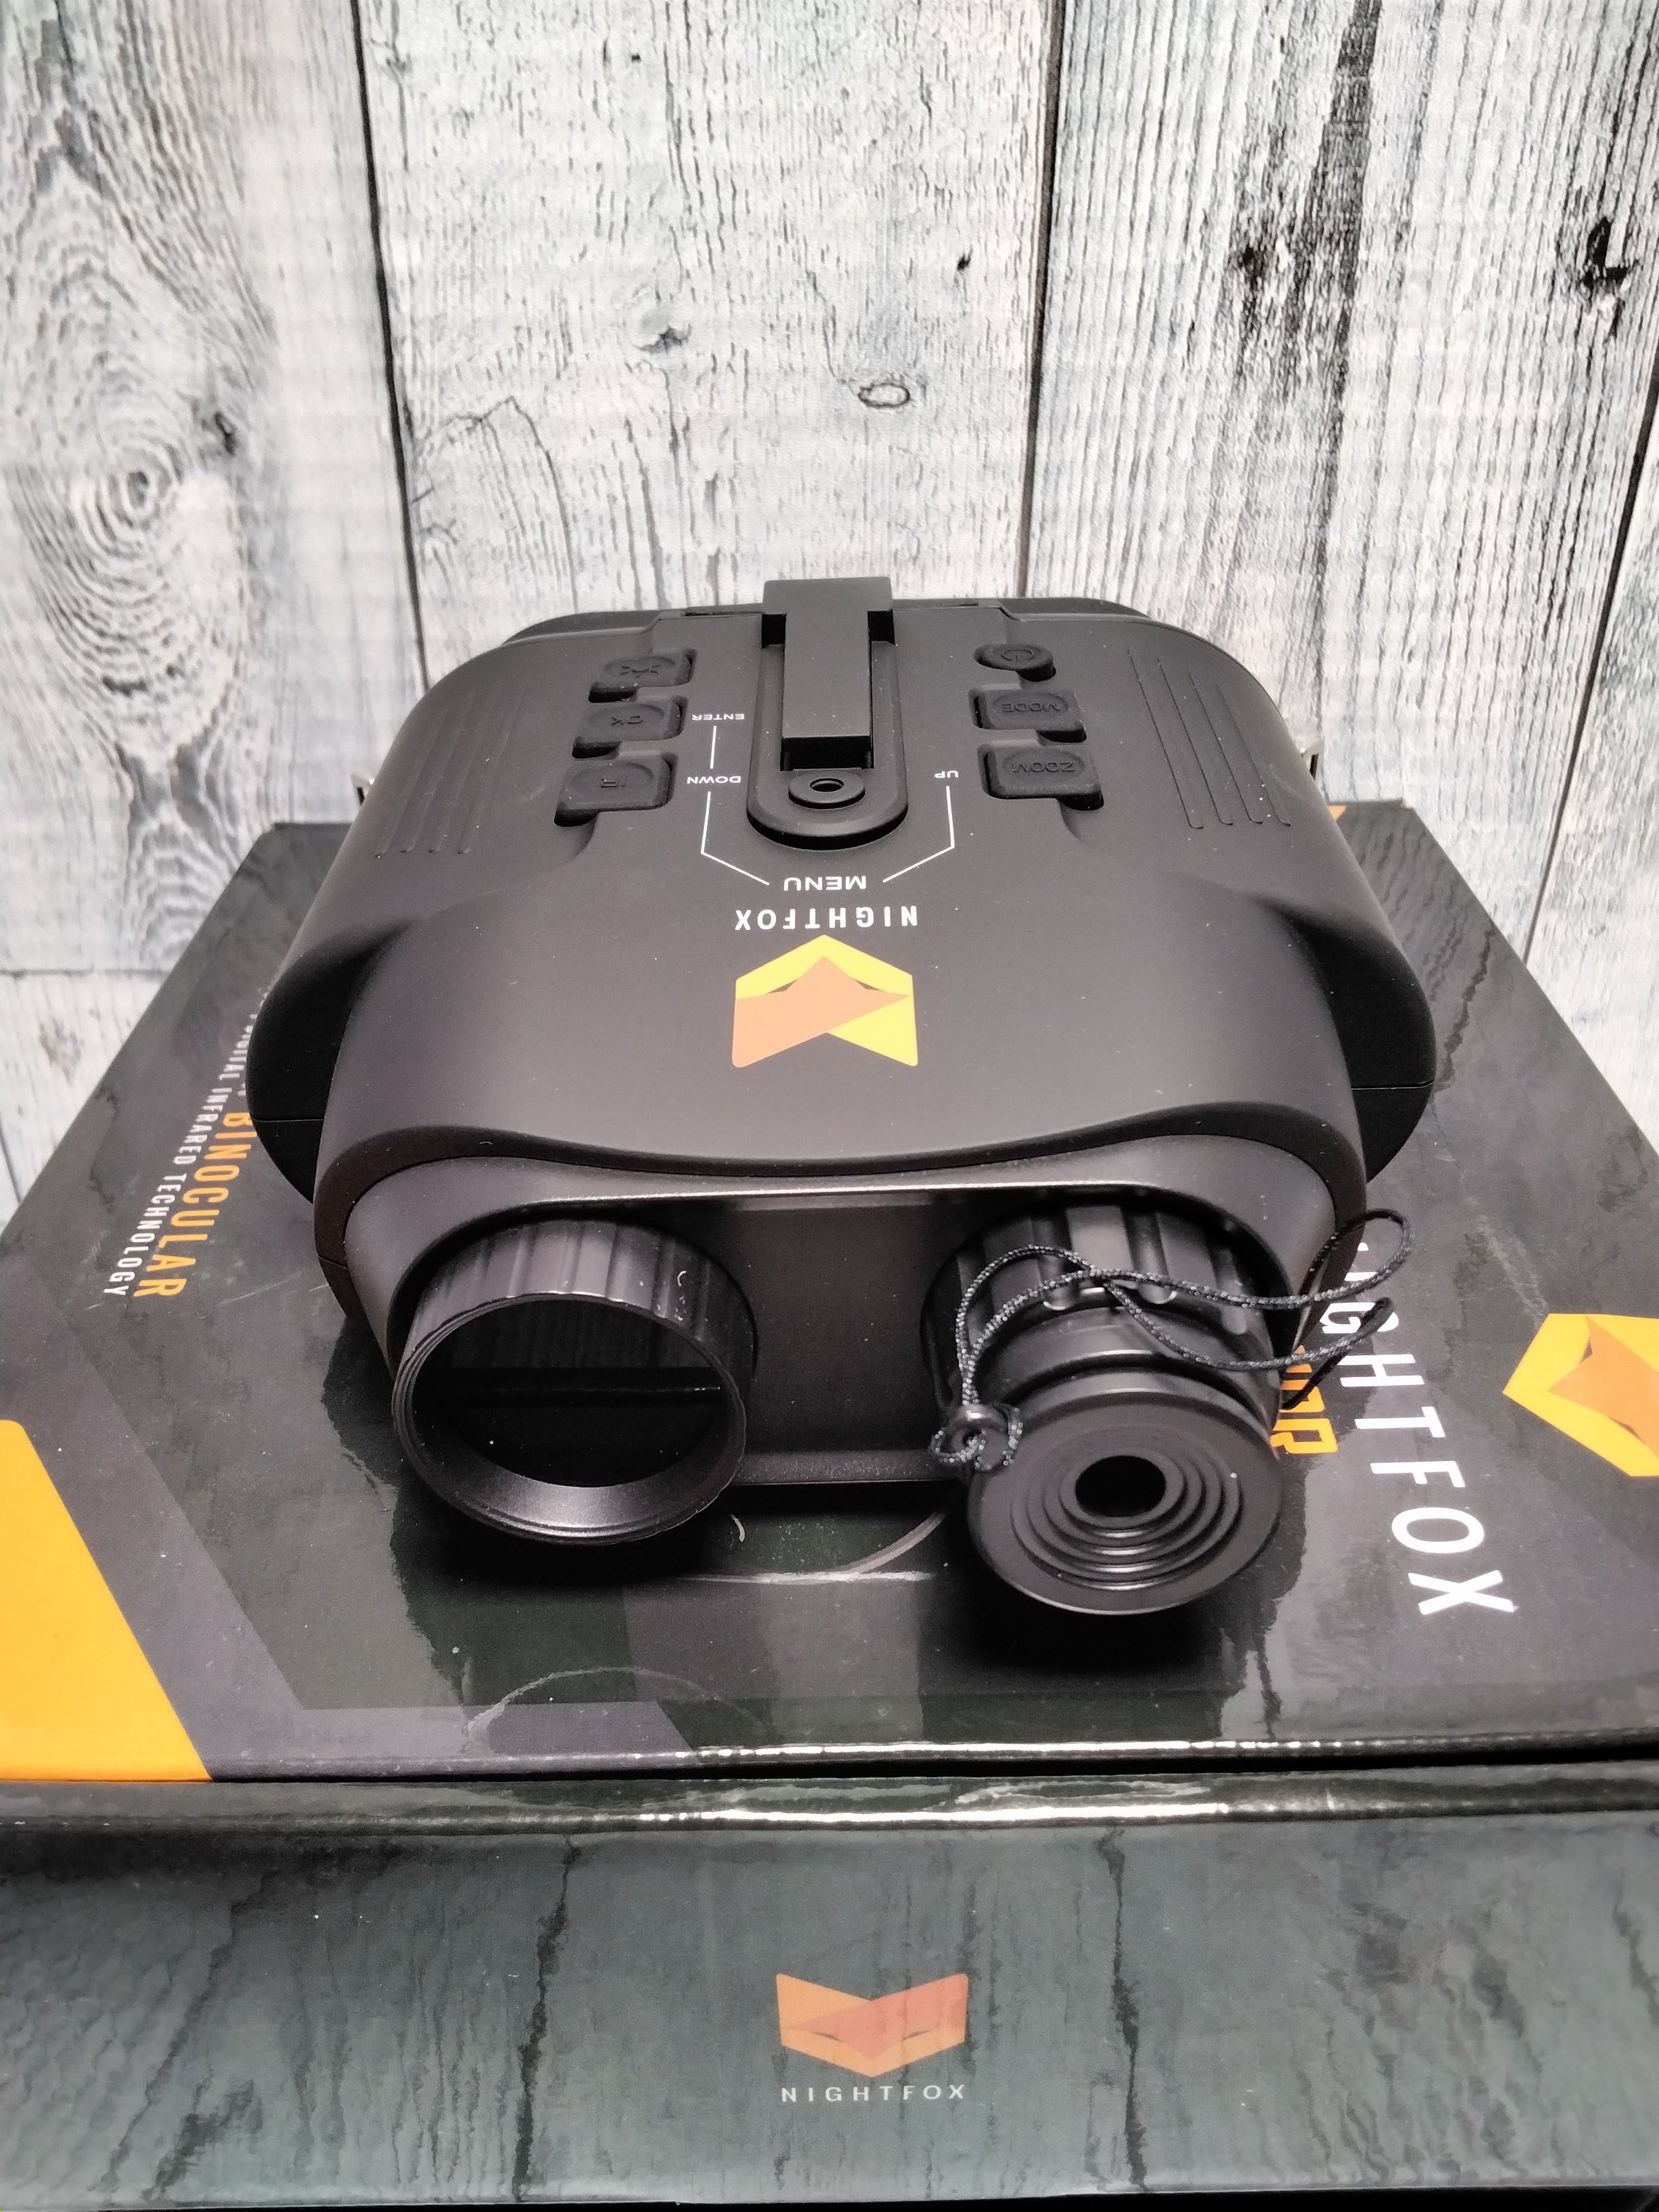 Nightfox 110R Widescreen Night Vision Binocular | Digital Infrared | 165yd Range (7760429613294)